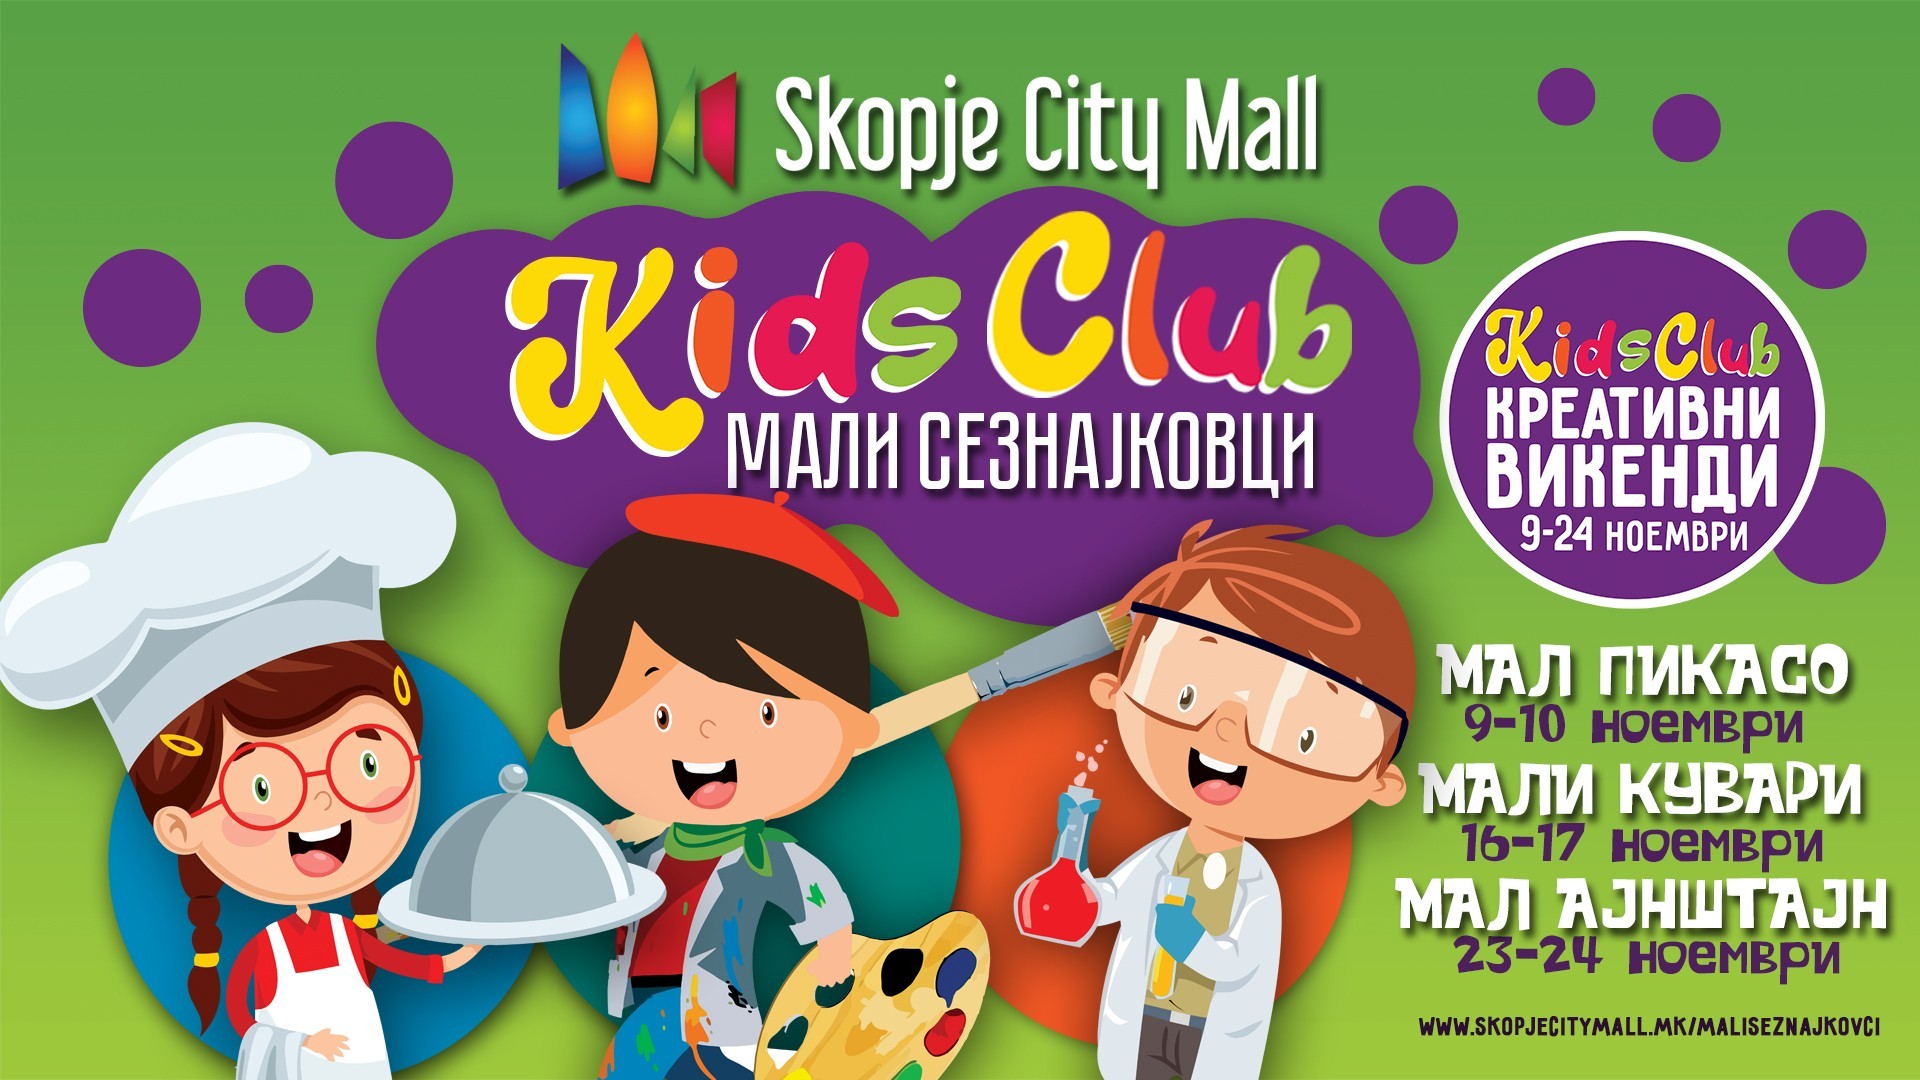 ‘’Мали сезнајковци’’ во Скопје Сити Мол